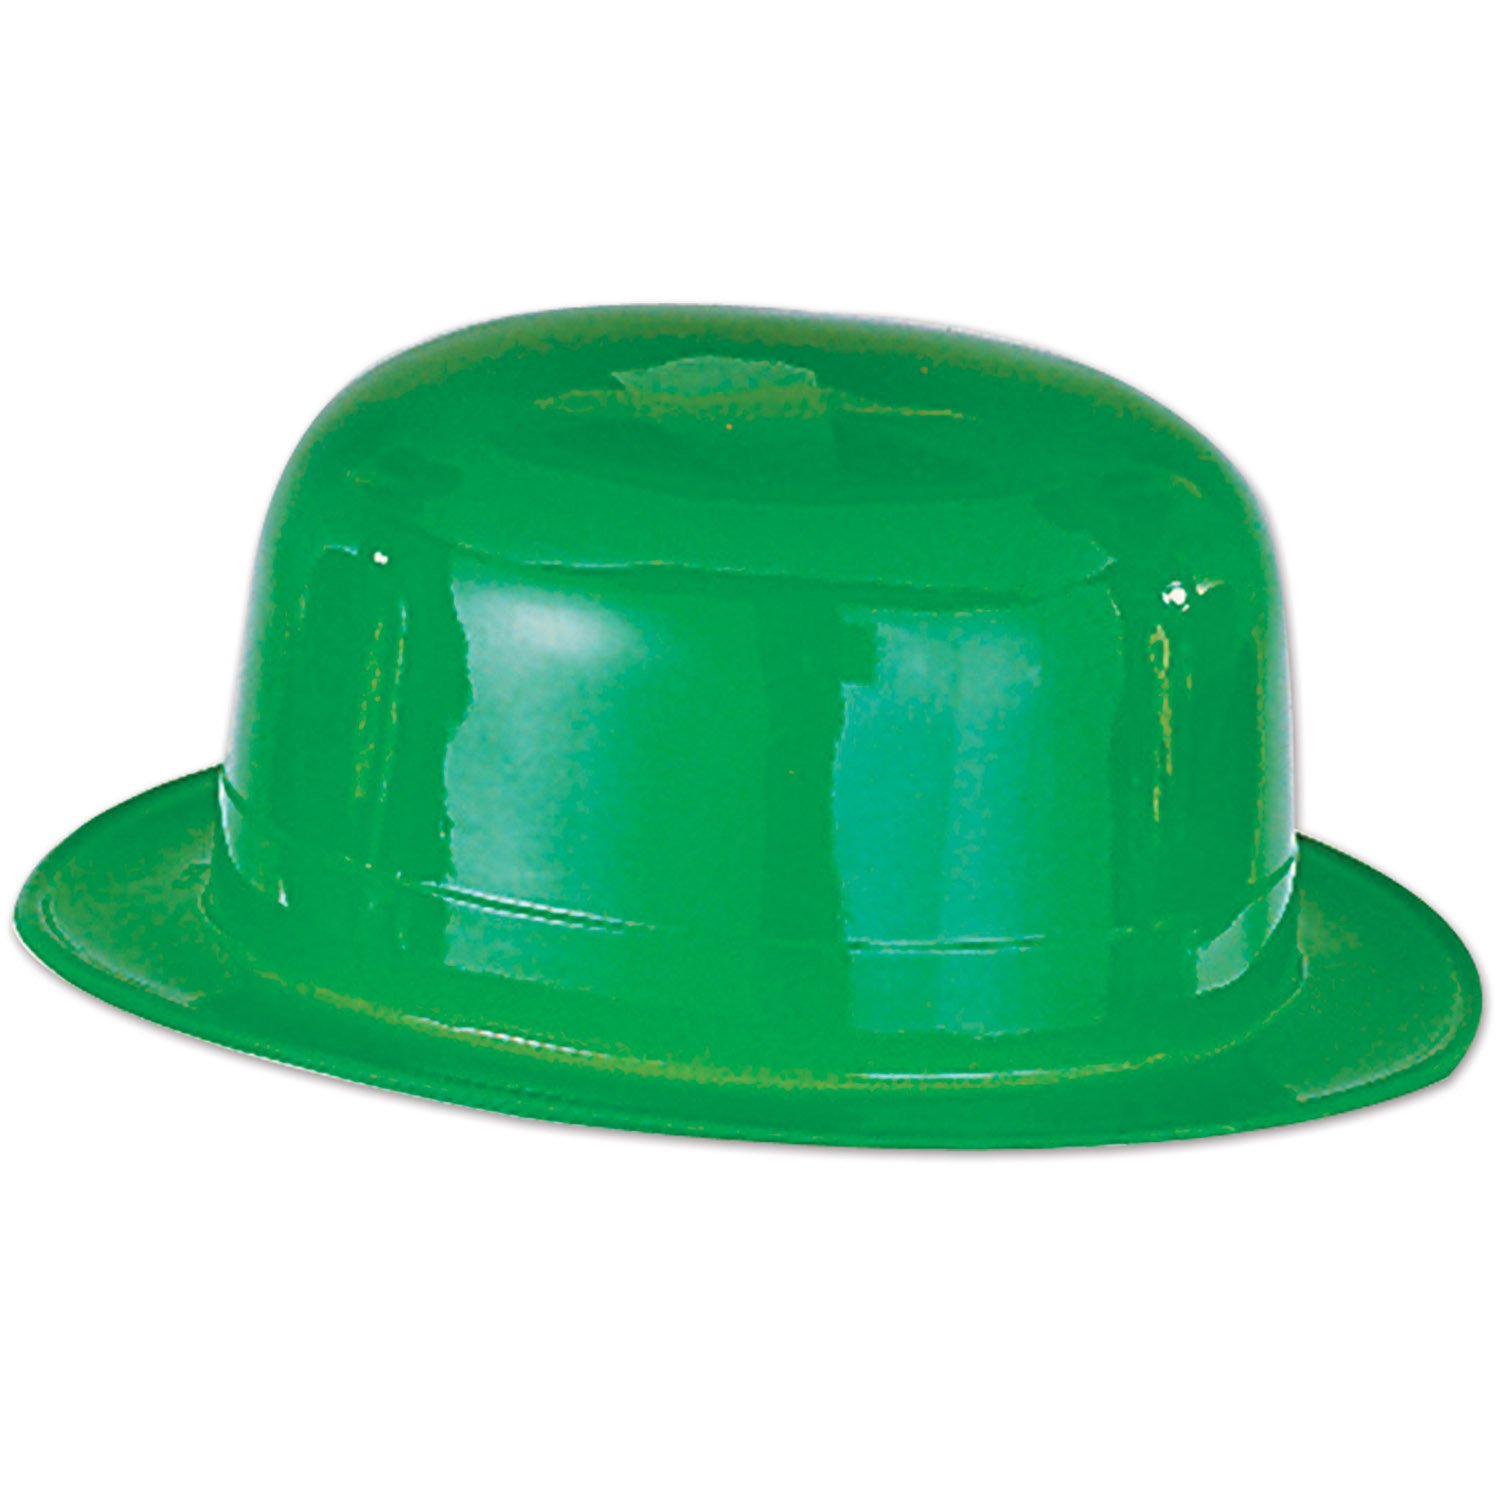 Beistle 33978 48-Pack Plastic Derbies Party Hat, Green